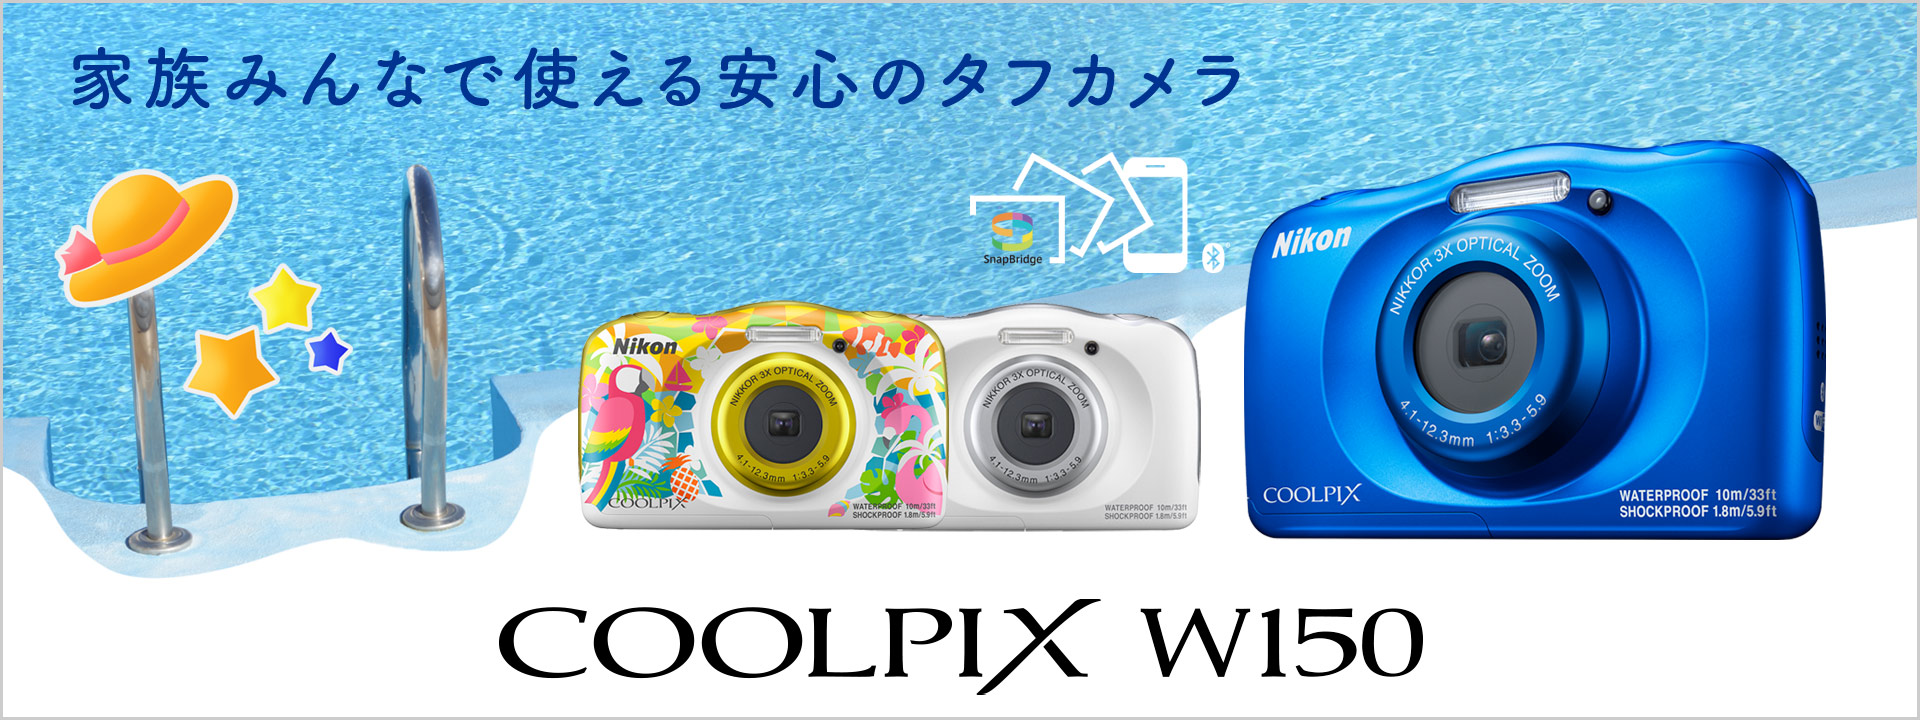 Nikon COOLPIX W150【説明書・SDカード付】